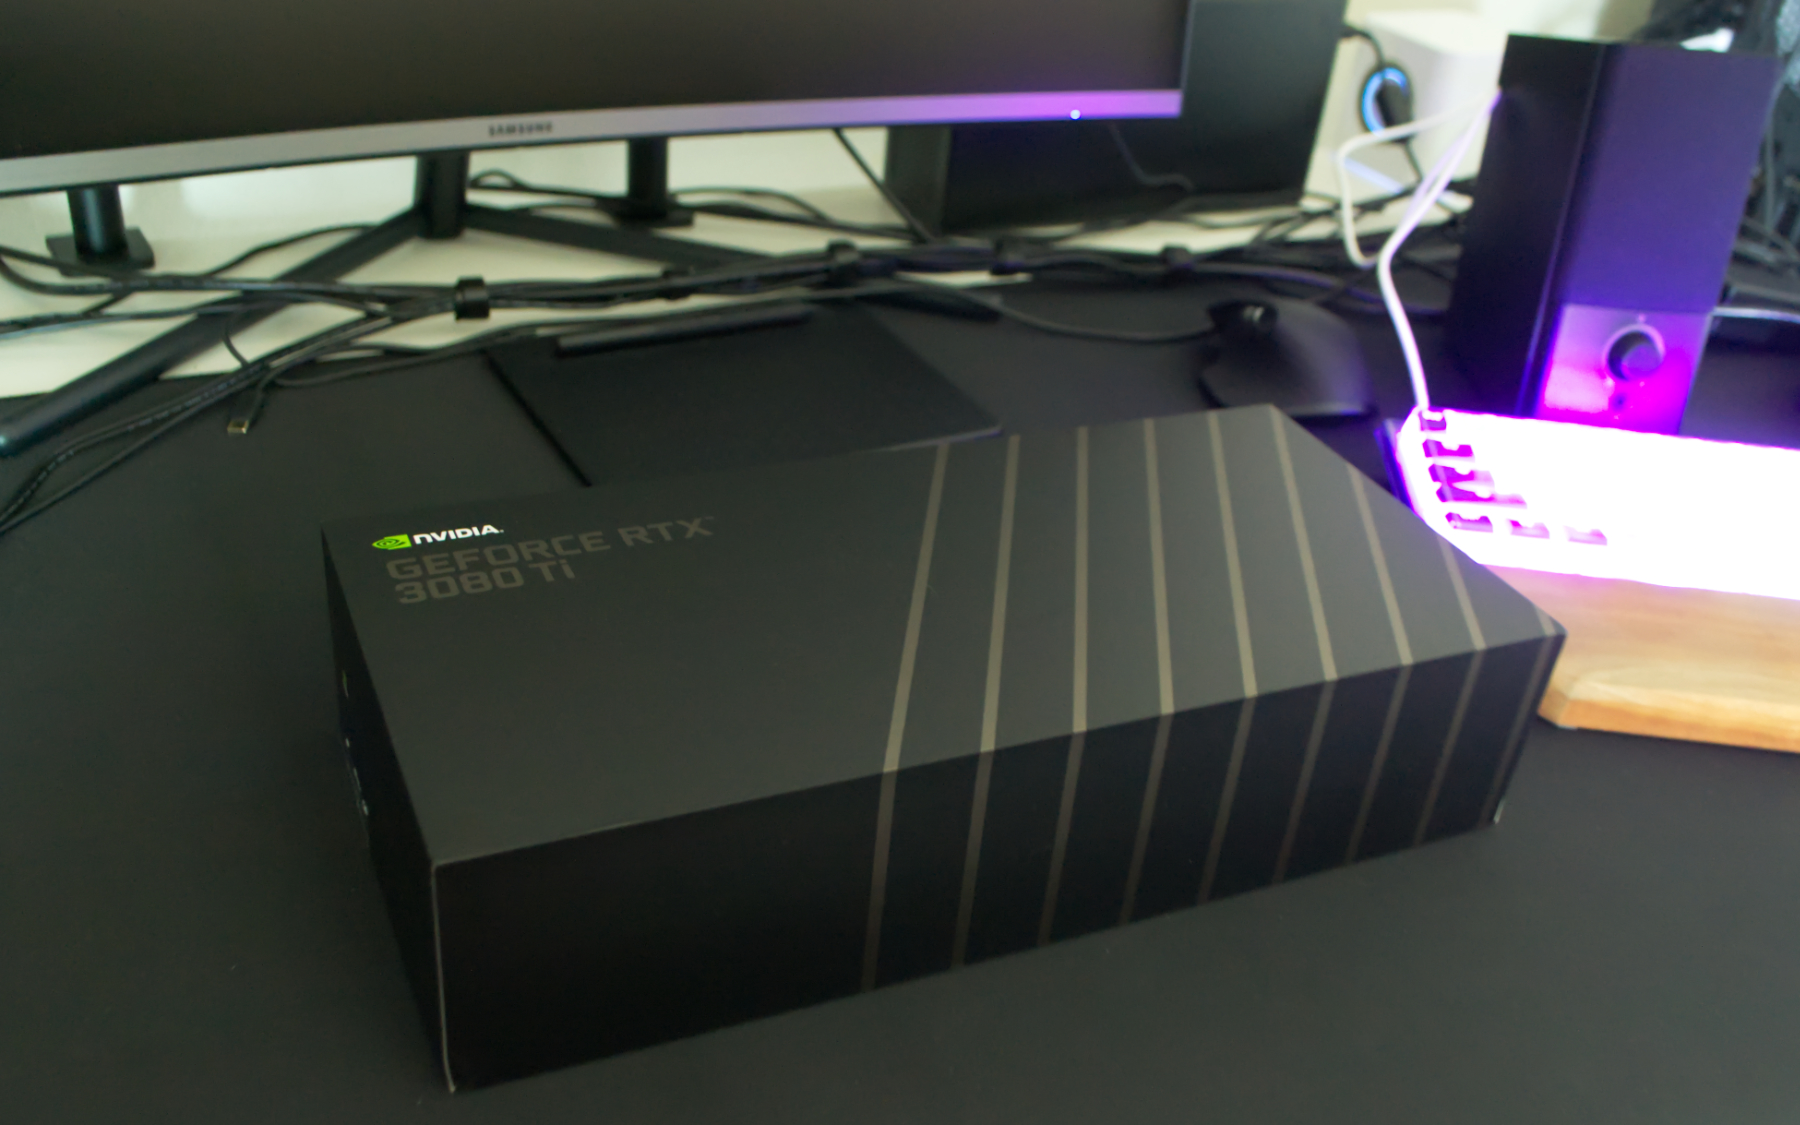 GeForce RTX 3080 Ti Founders Edition box